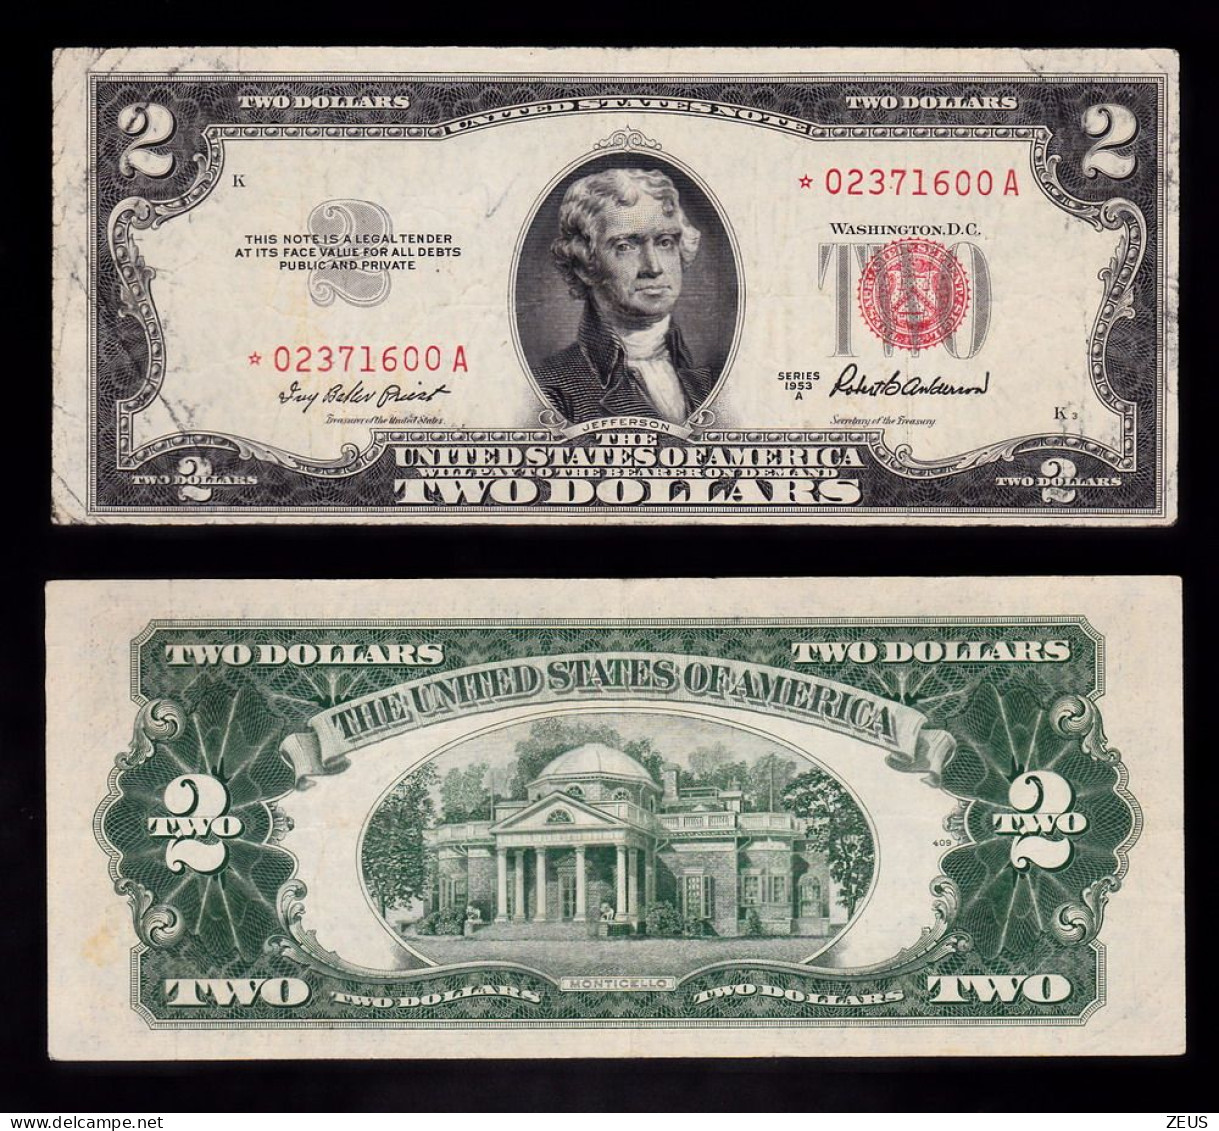 USA 2 DOLLARI 1953 PIK 380 REPLACEMENT  BB - United States Notes (1928-1953)